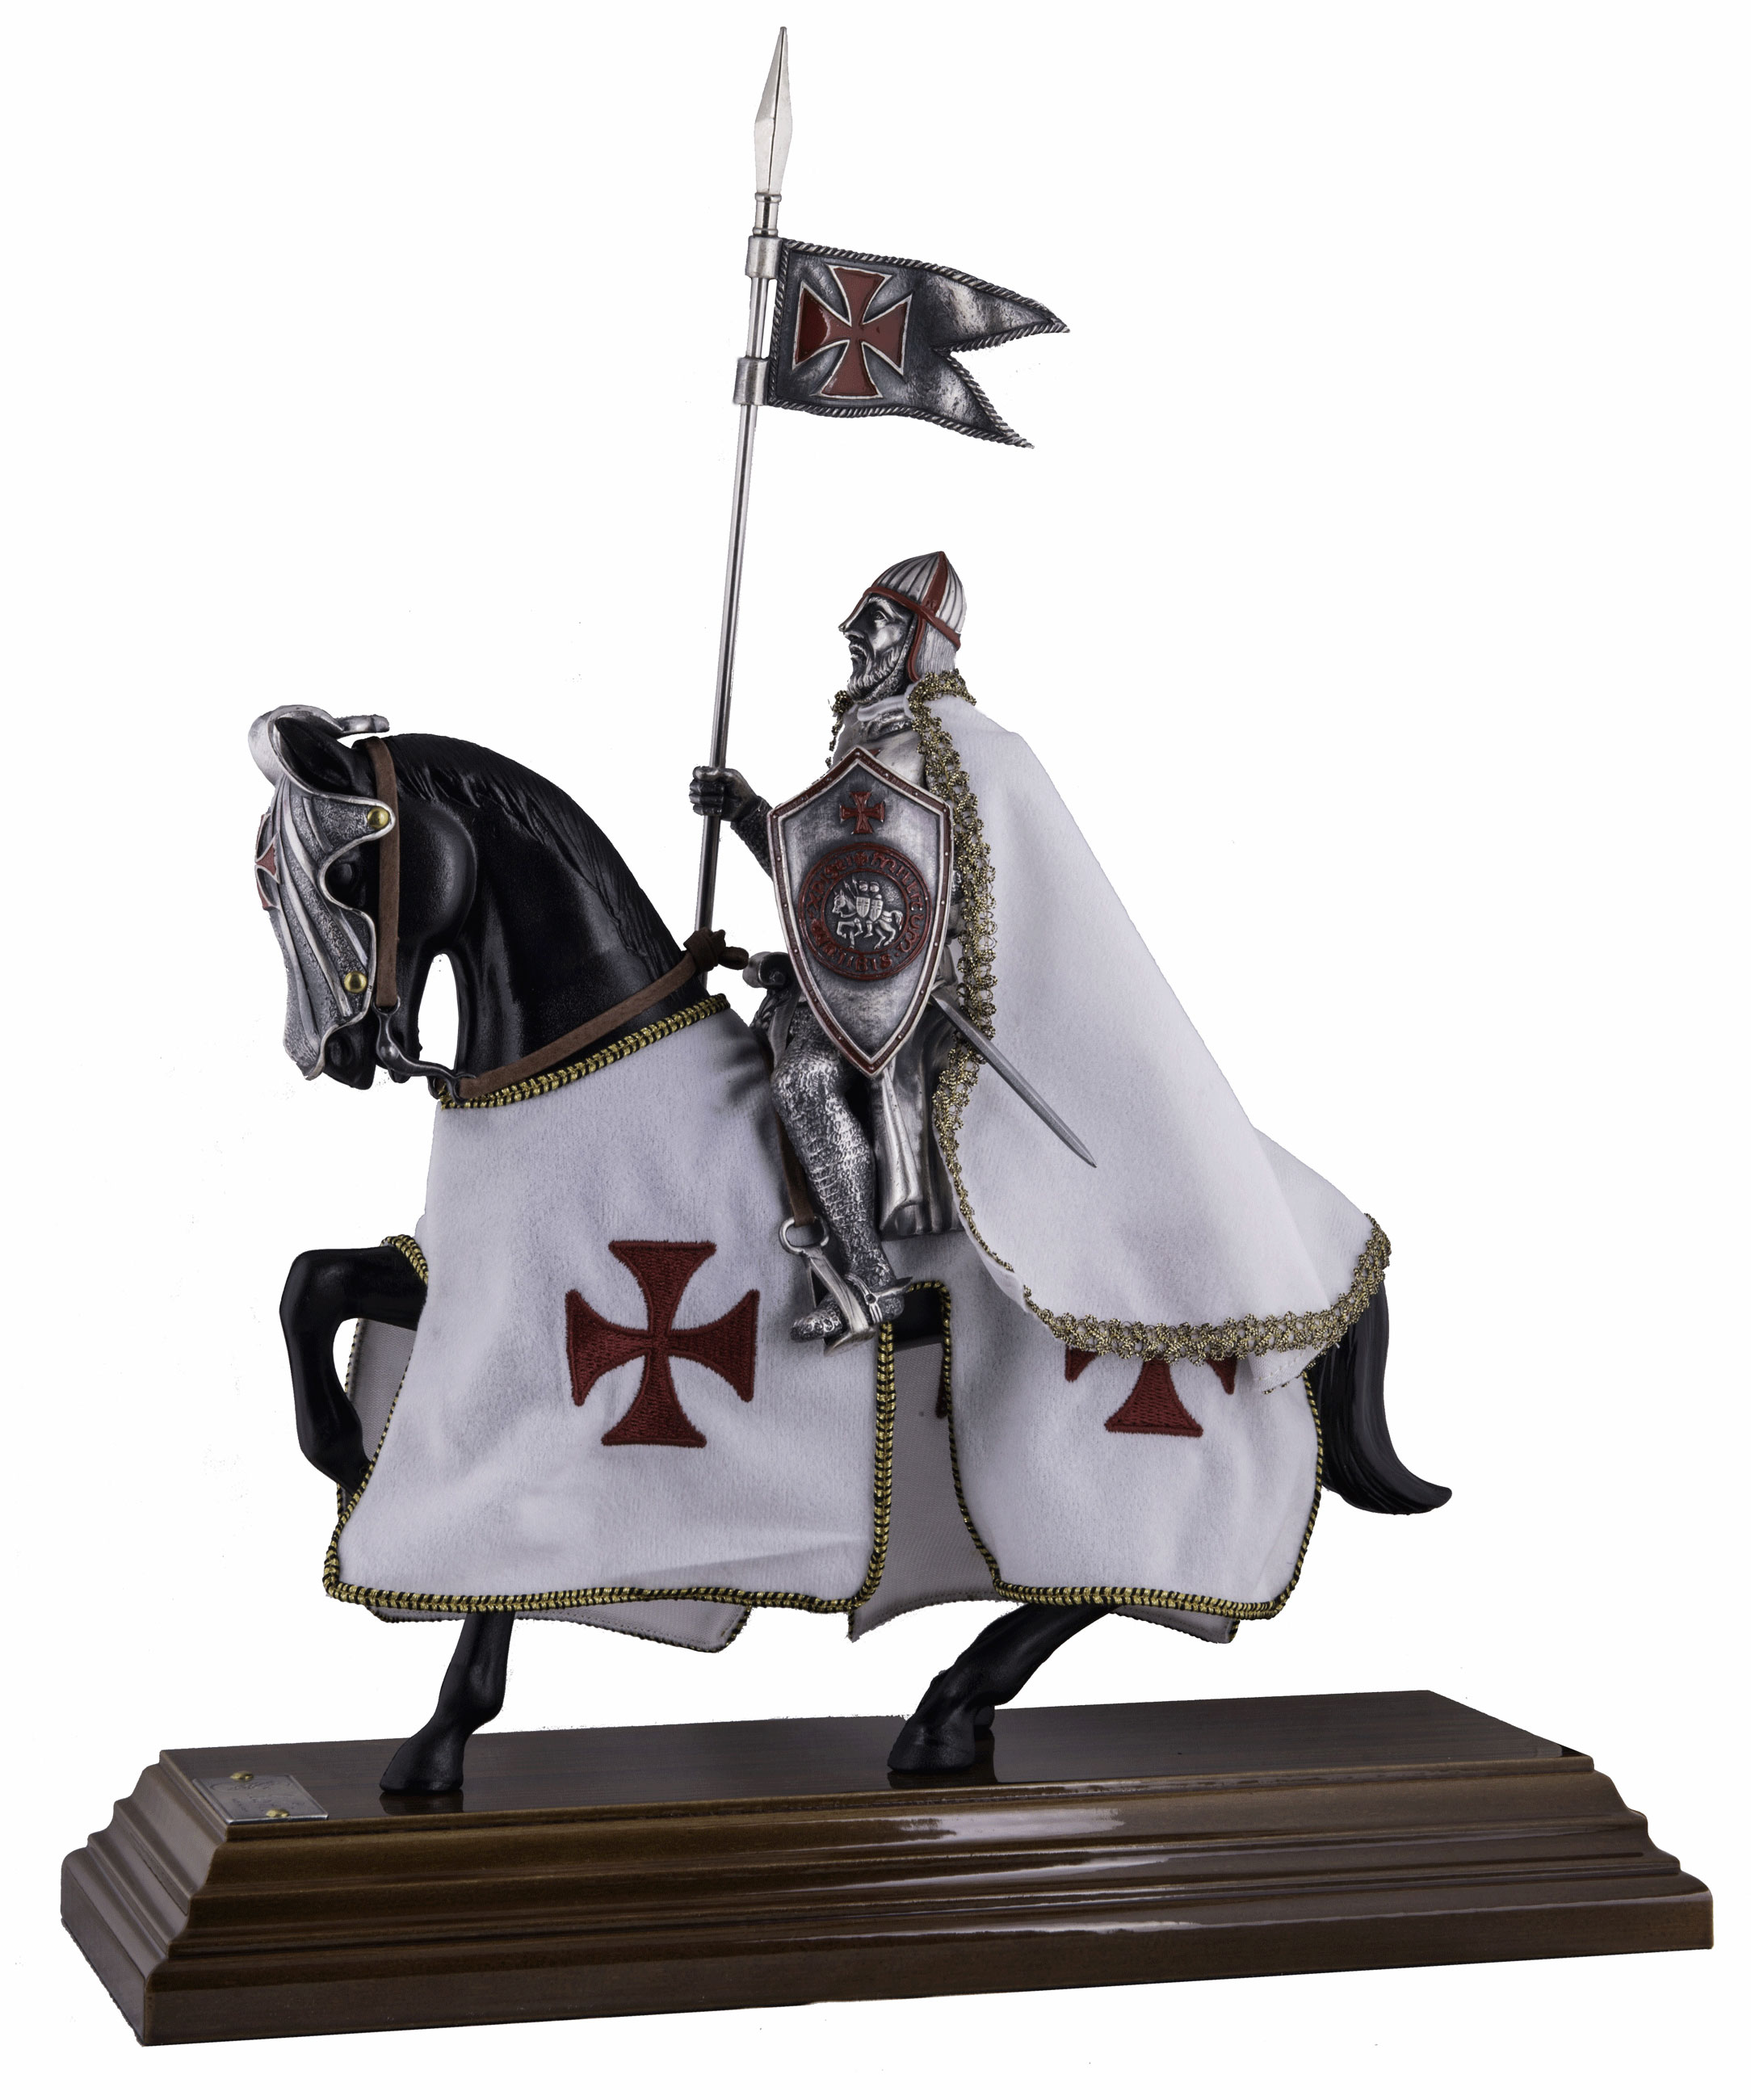 Miniature Templar knight on horse, equestrian armor